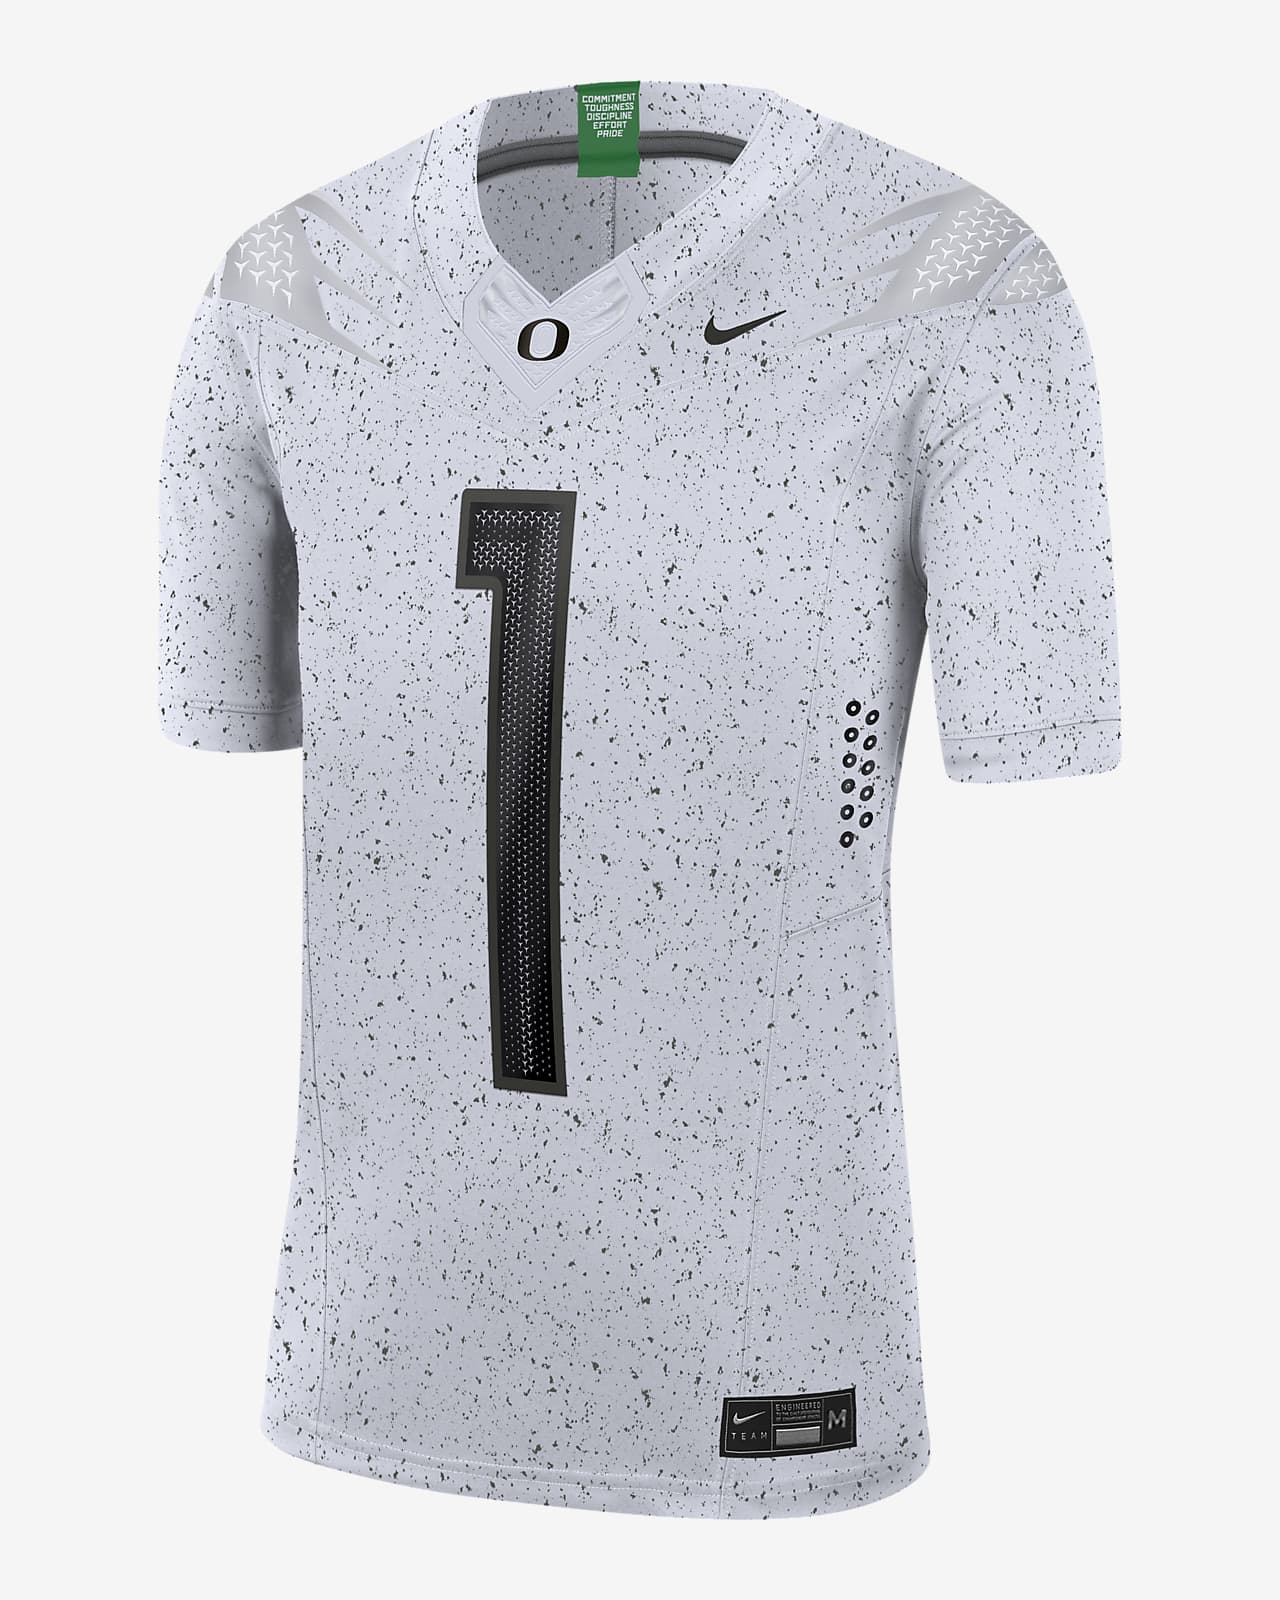 Camiseta de americano edición limitada para hombre Nike (Oregon). Nike.com